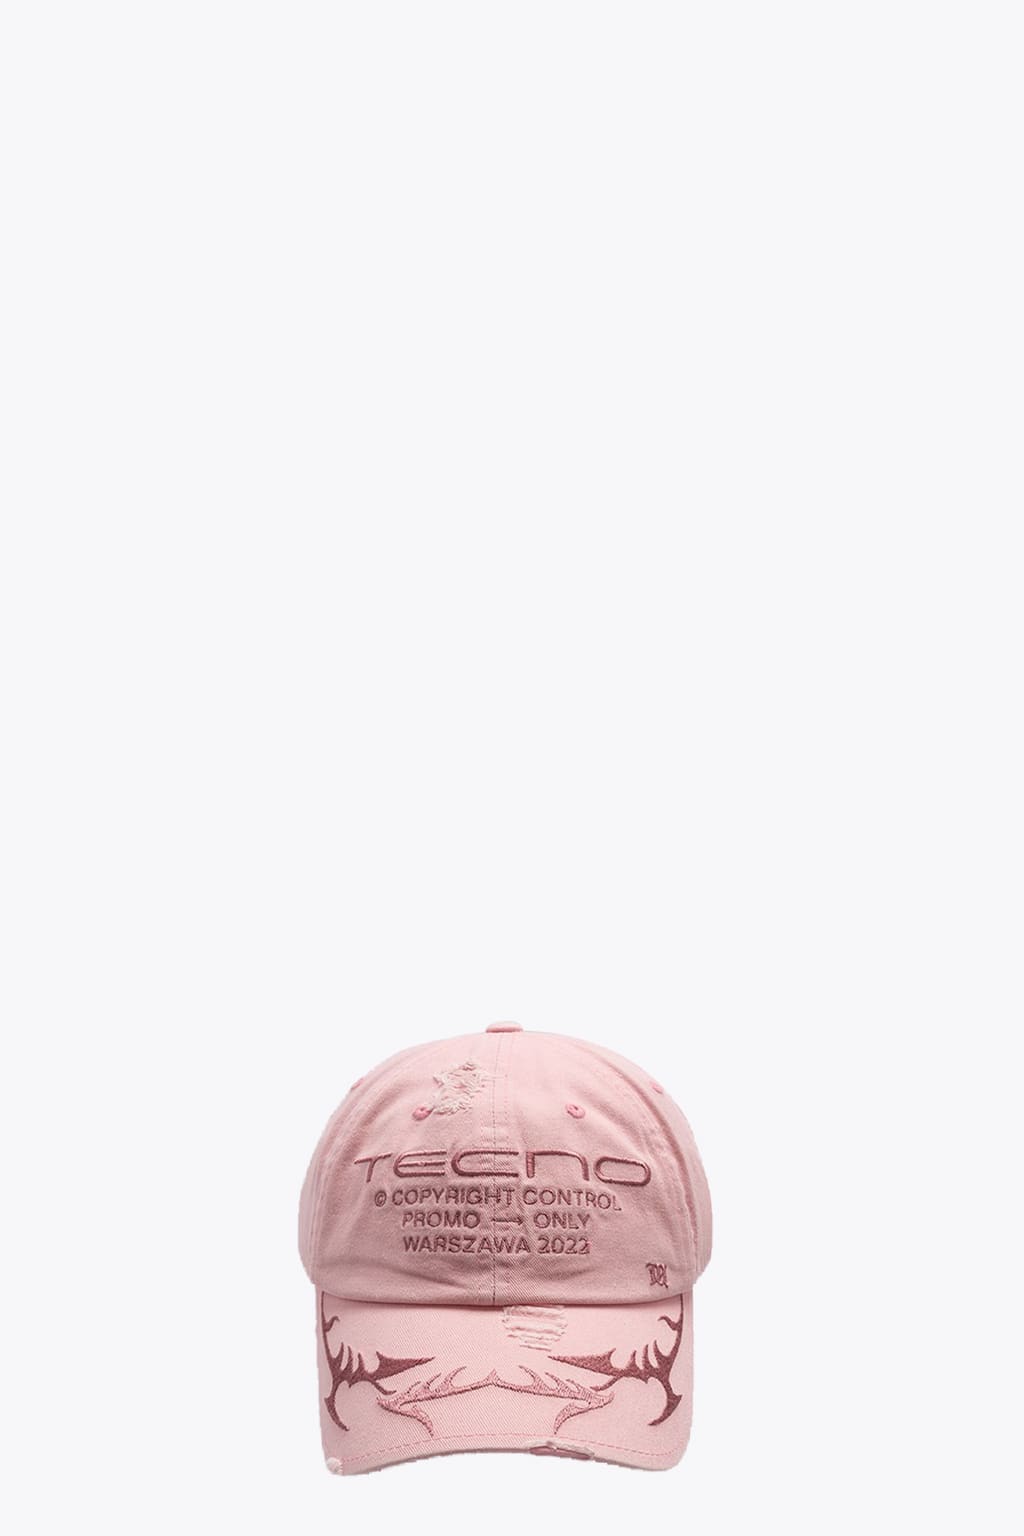 MISBHV Tecno Cap Pink cotton cap with embroidery - Tecno cap